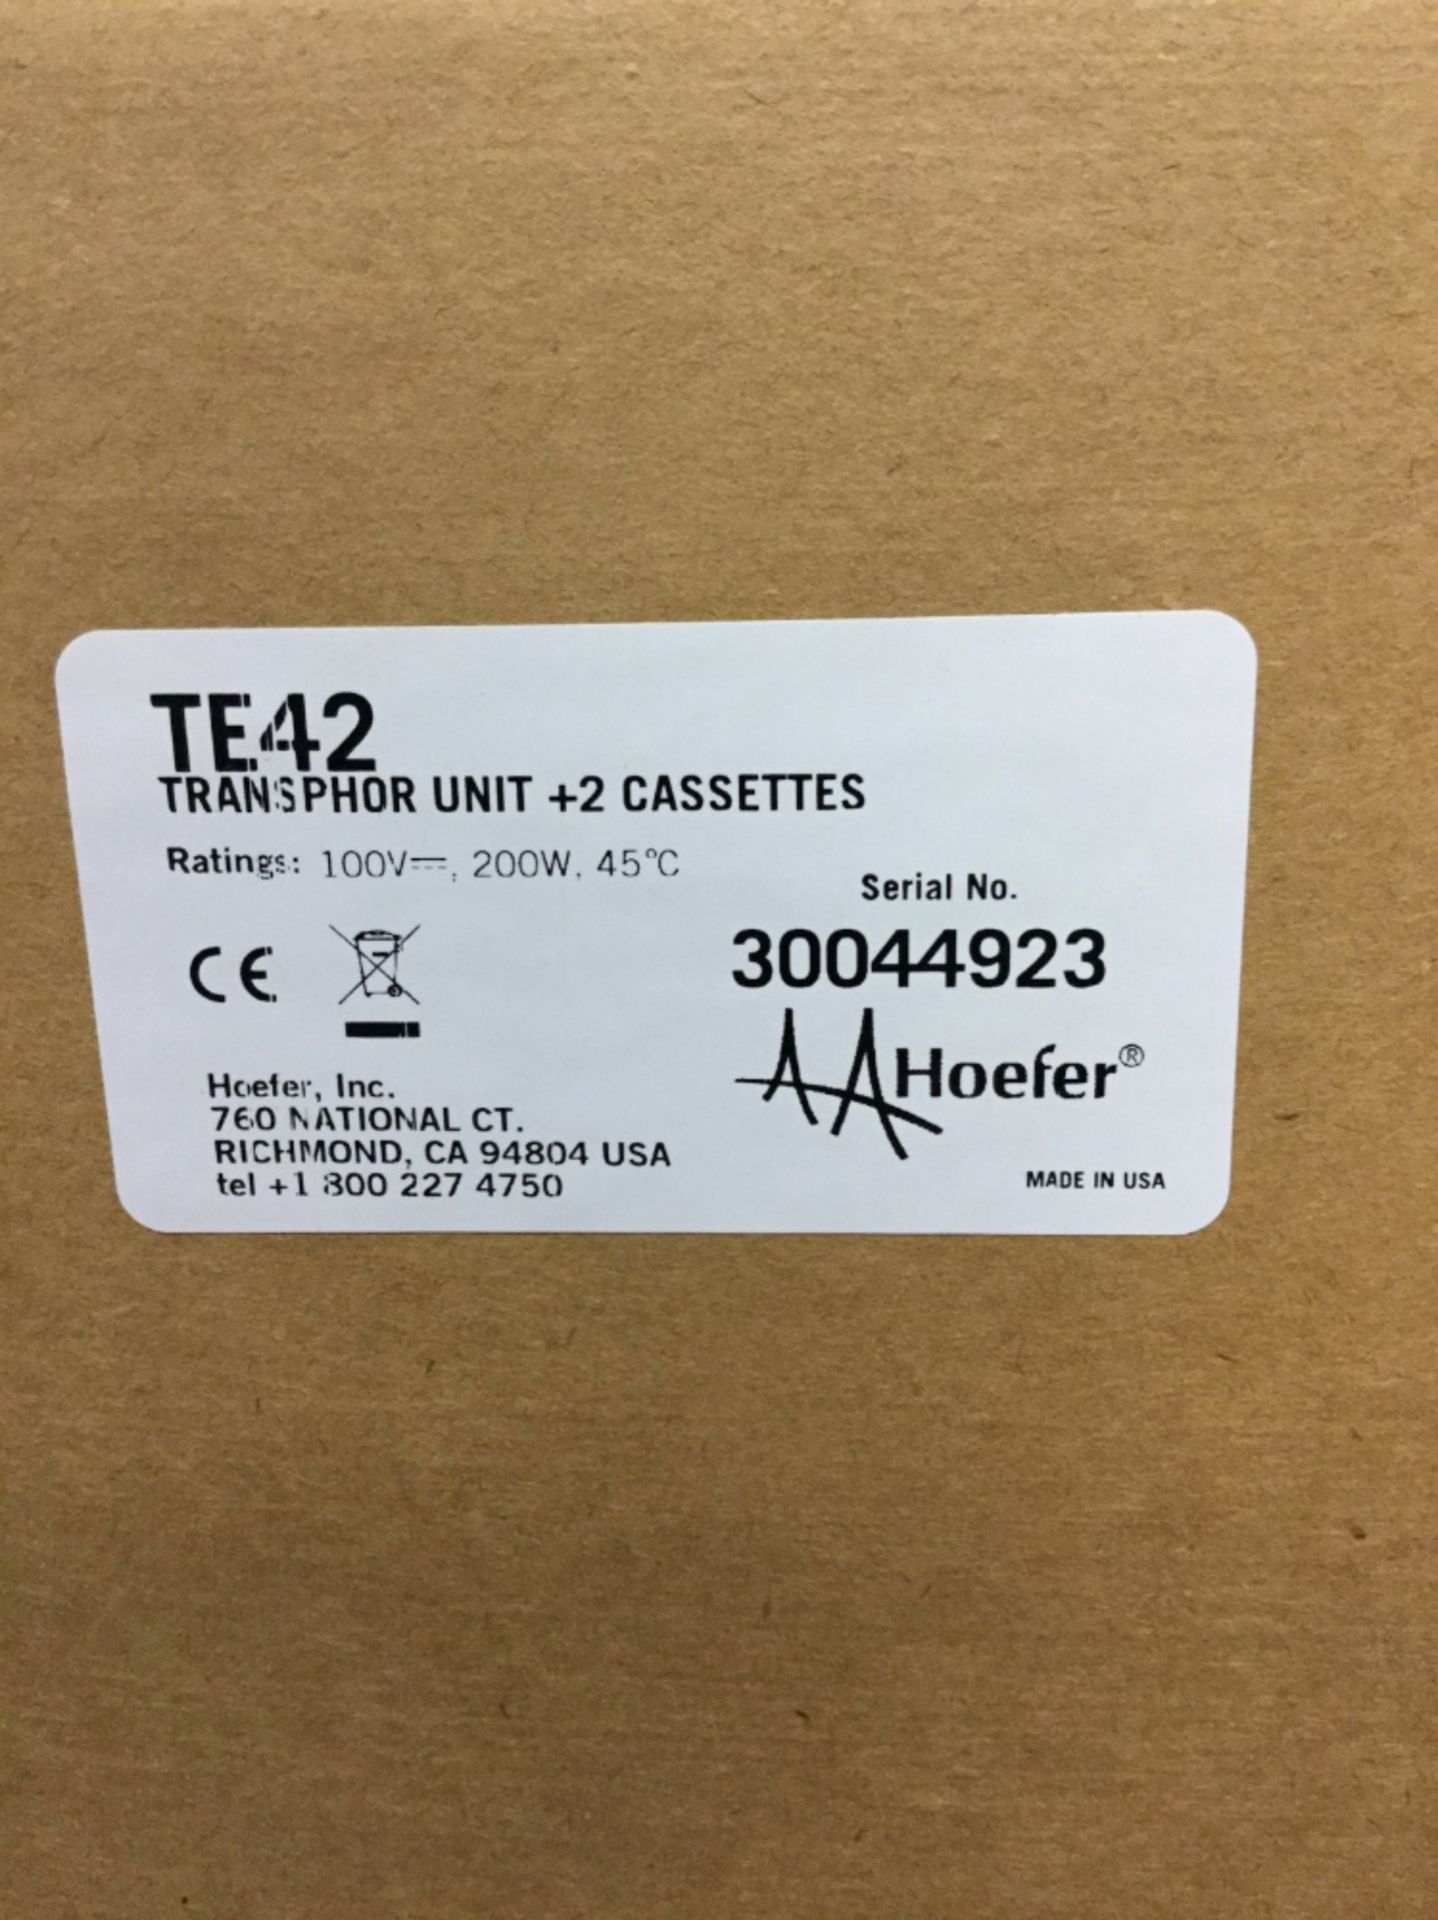 Hoefer TE42 Electrophoresis Transphor Unit +2 Cassettes - Image 2 of 2